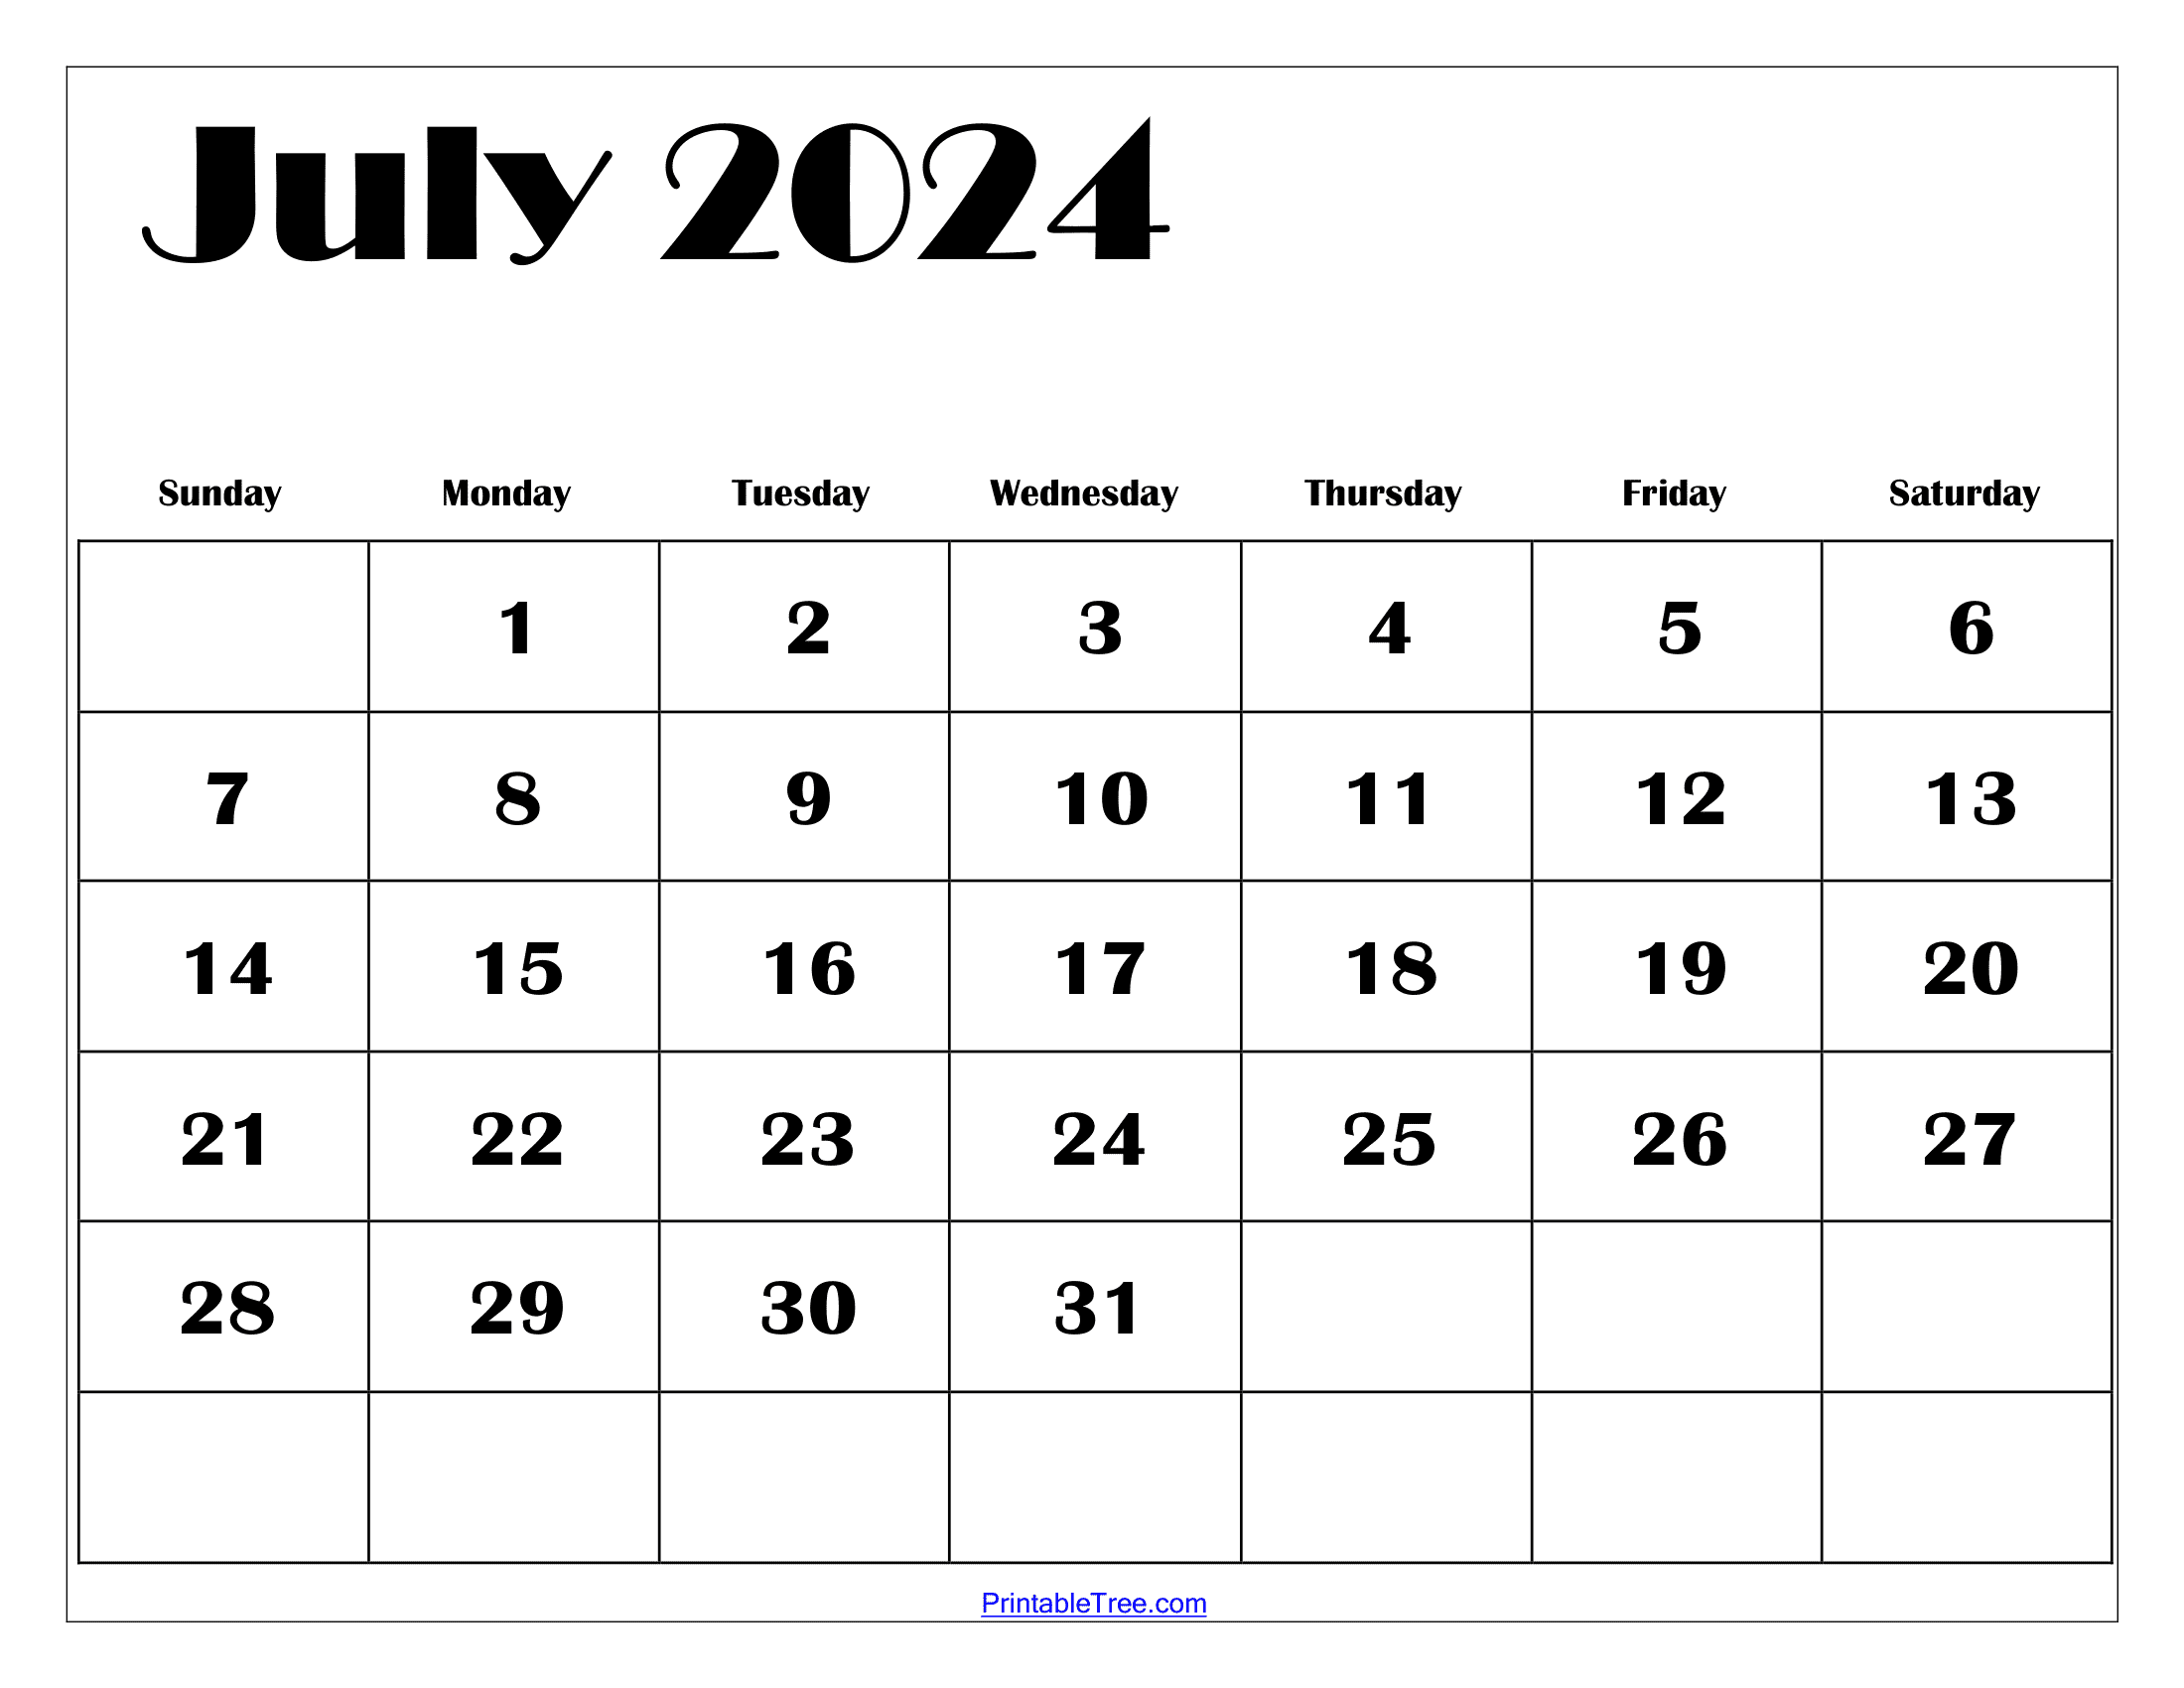 July 2024 Calendar Printable Pdf With Holidays Free Template for Calendar Printable July 2024